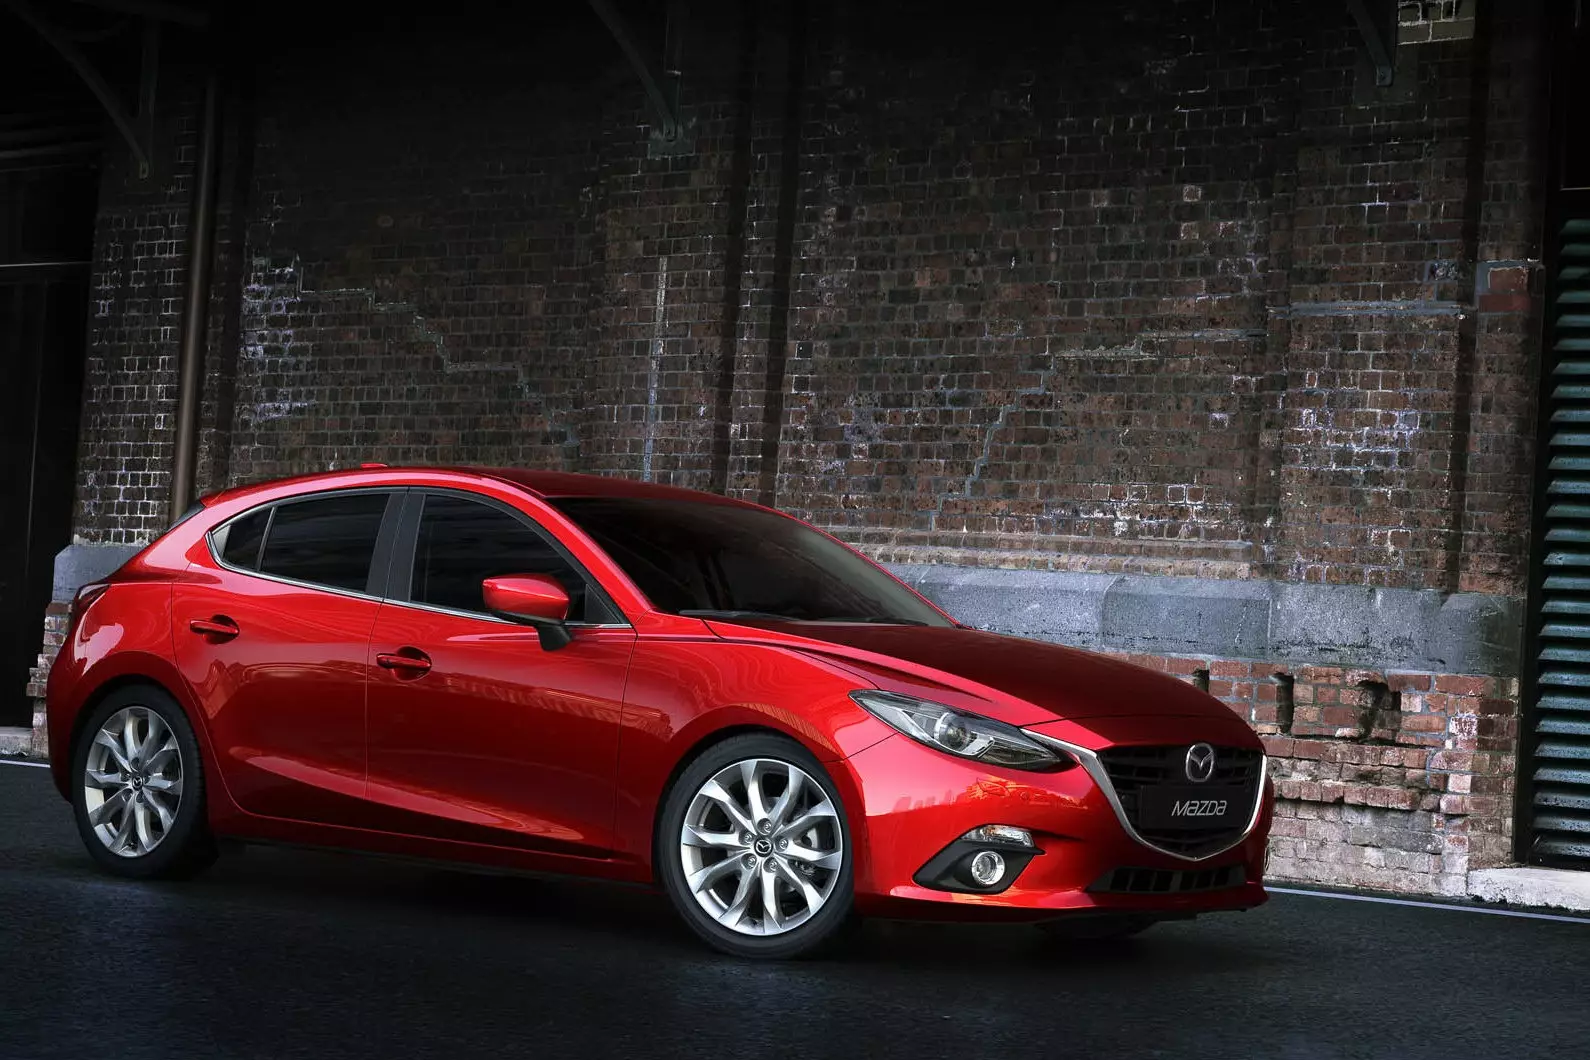 Beeldlek laat nuwe Mazda 3 ontbloot